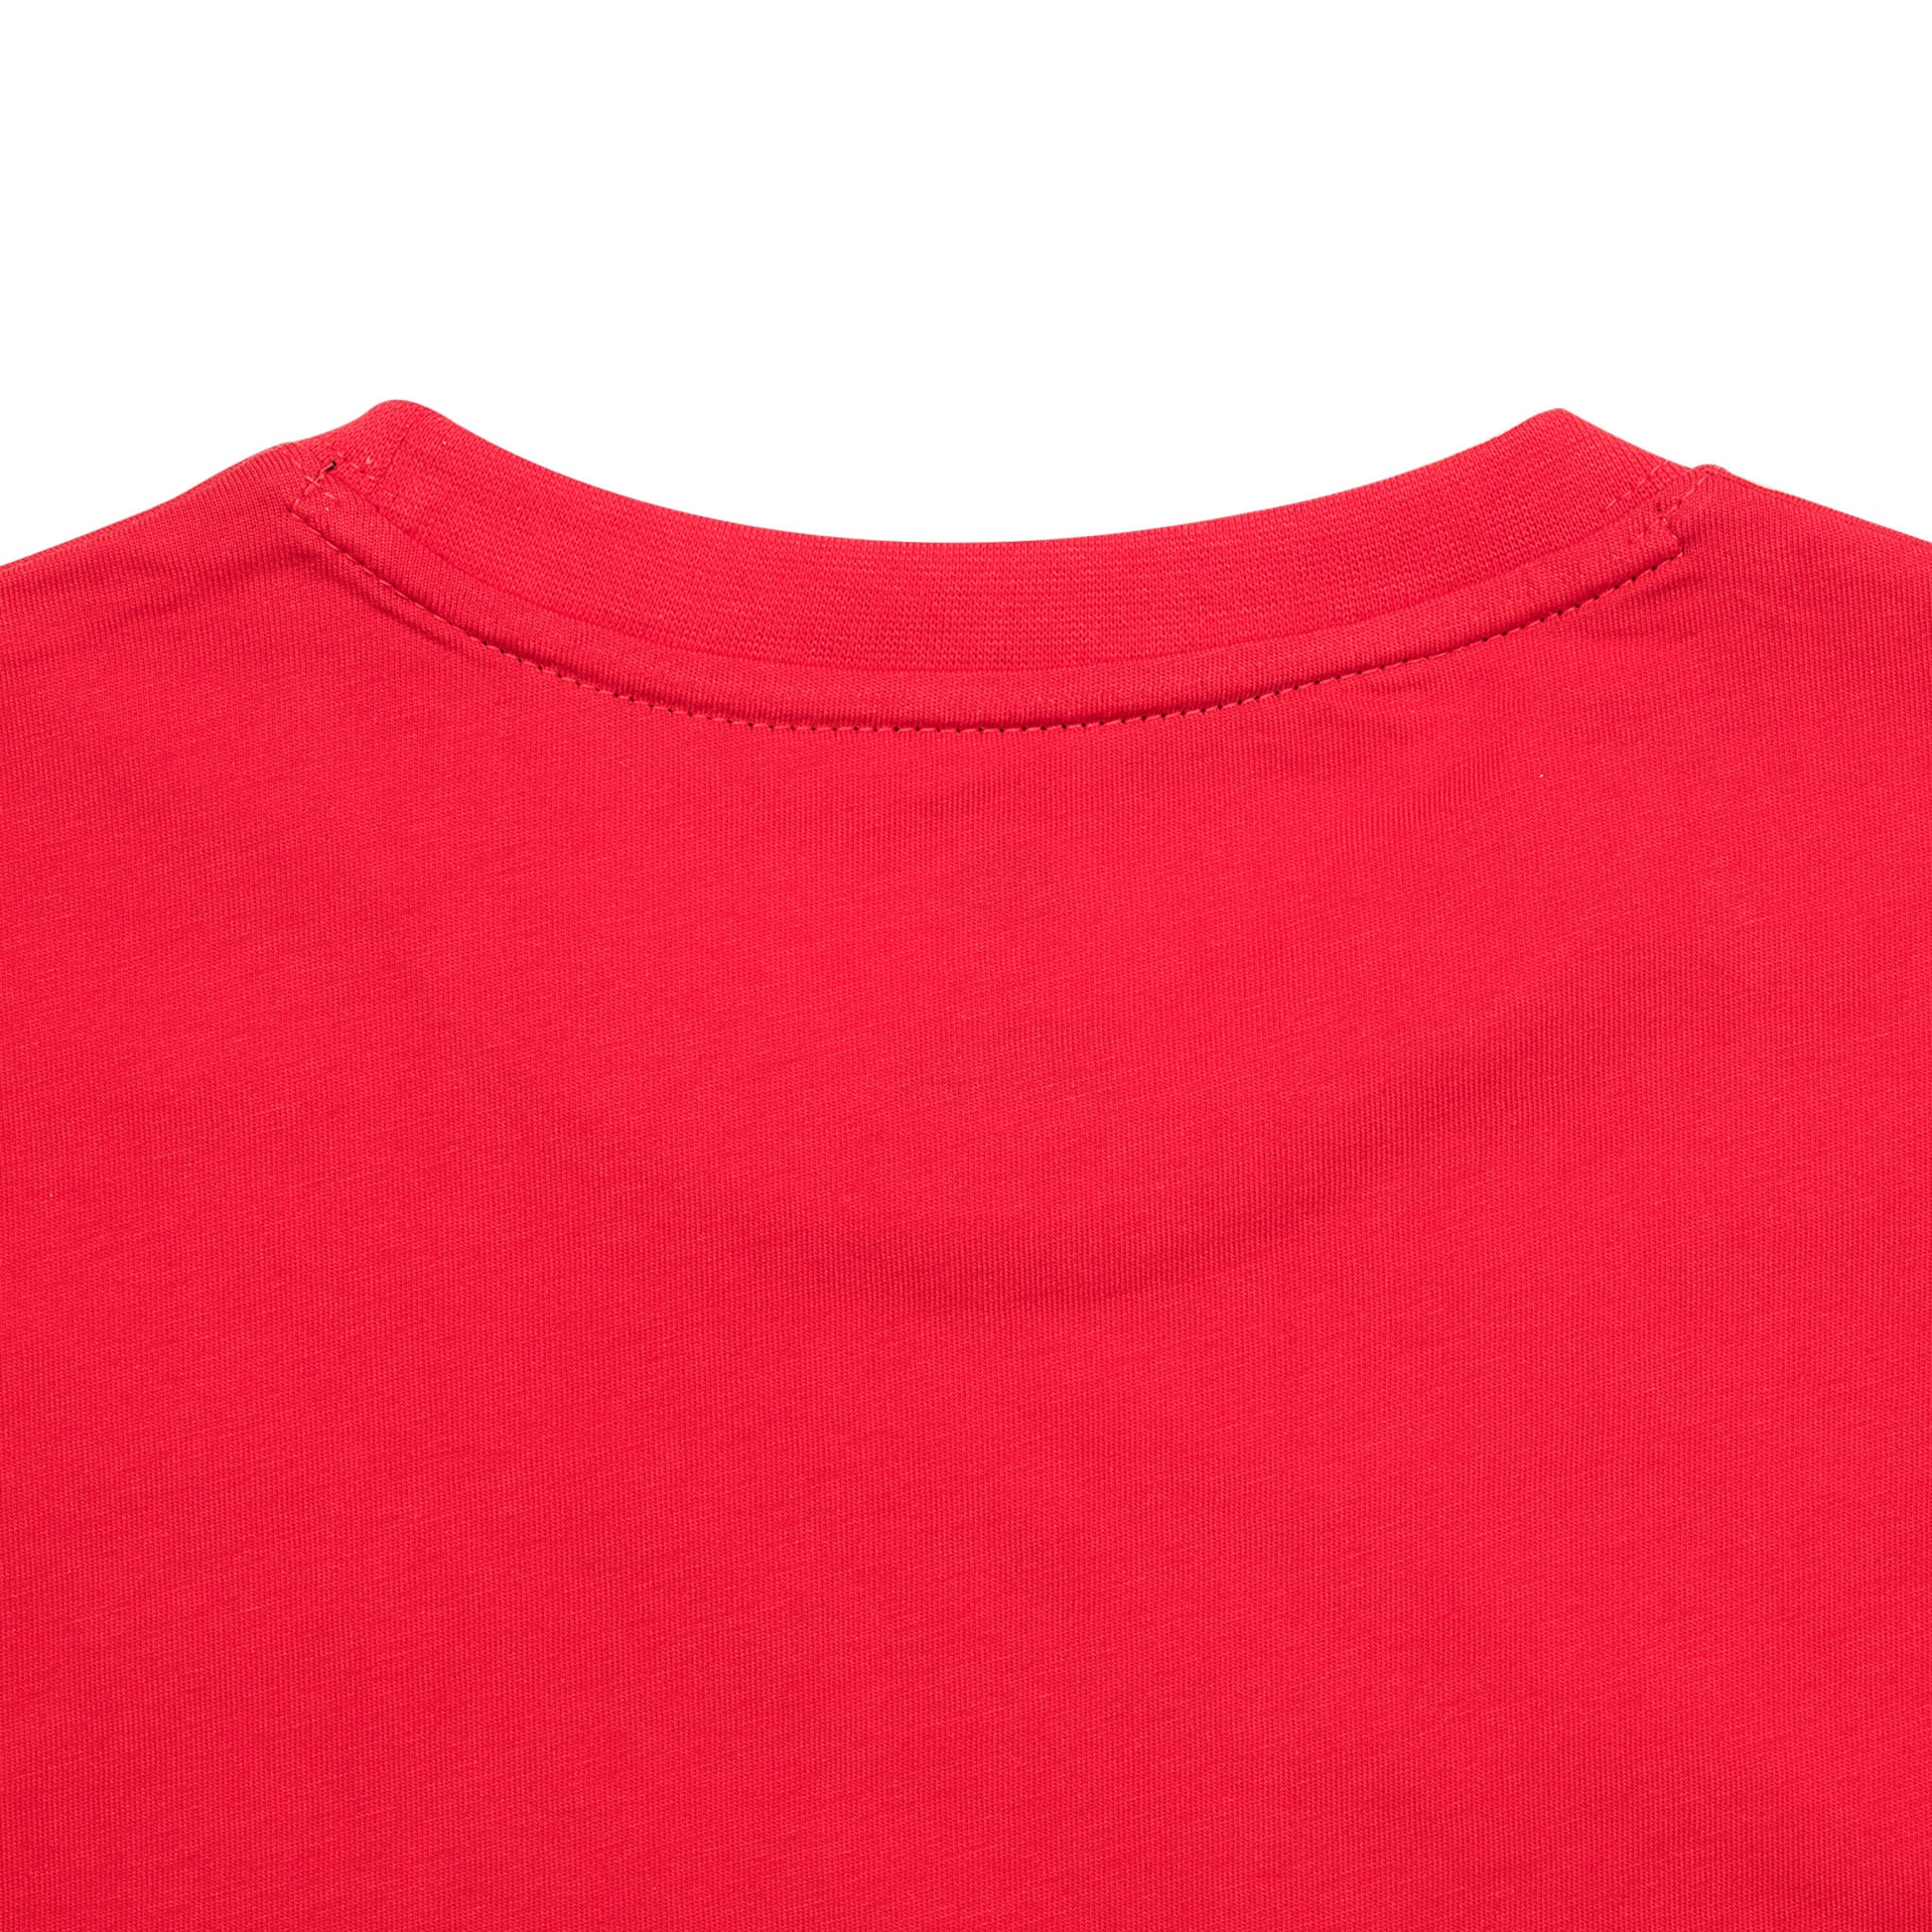 Clts21 B Adidas Boxing T Shirt Red 07